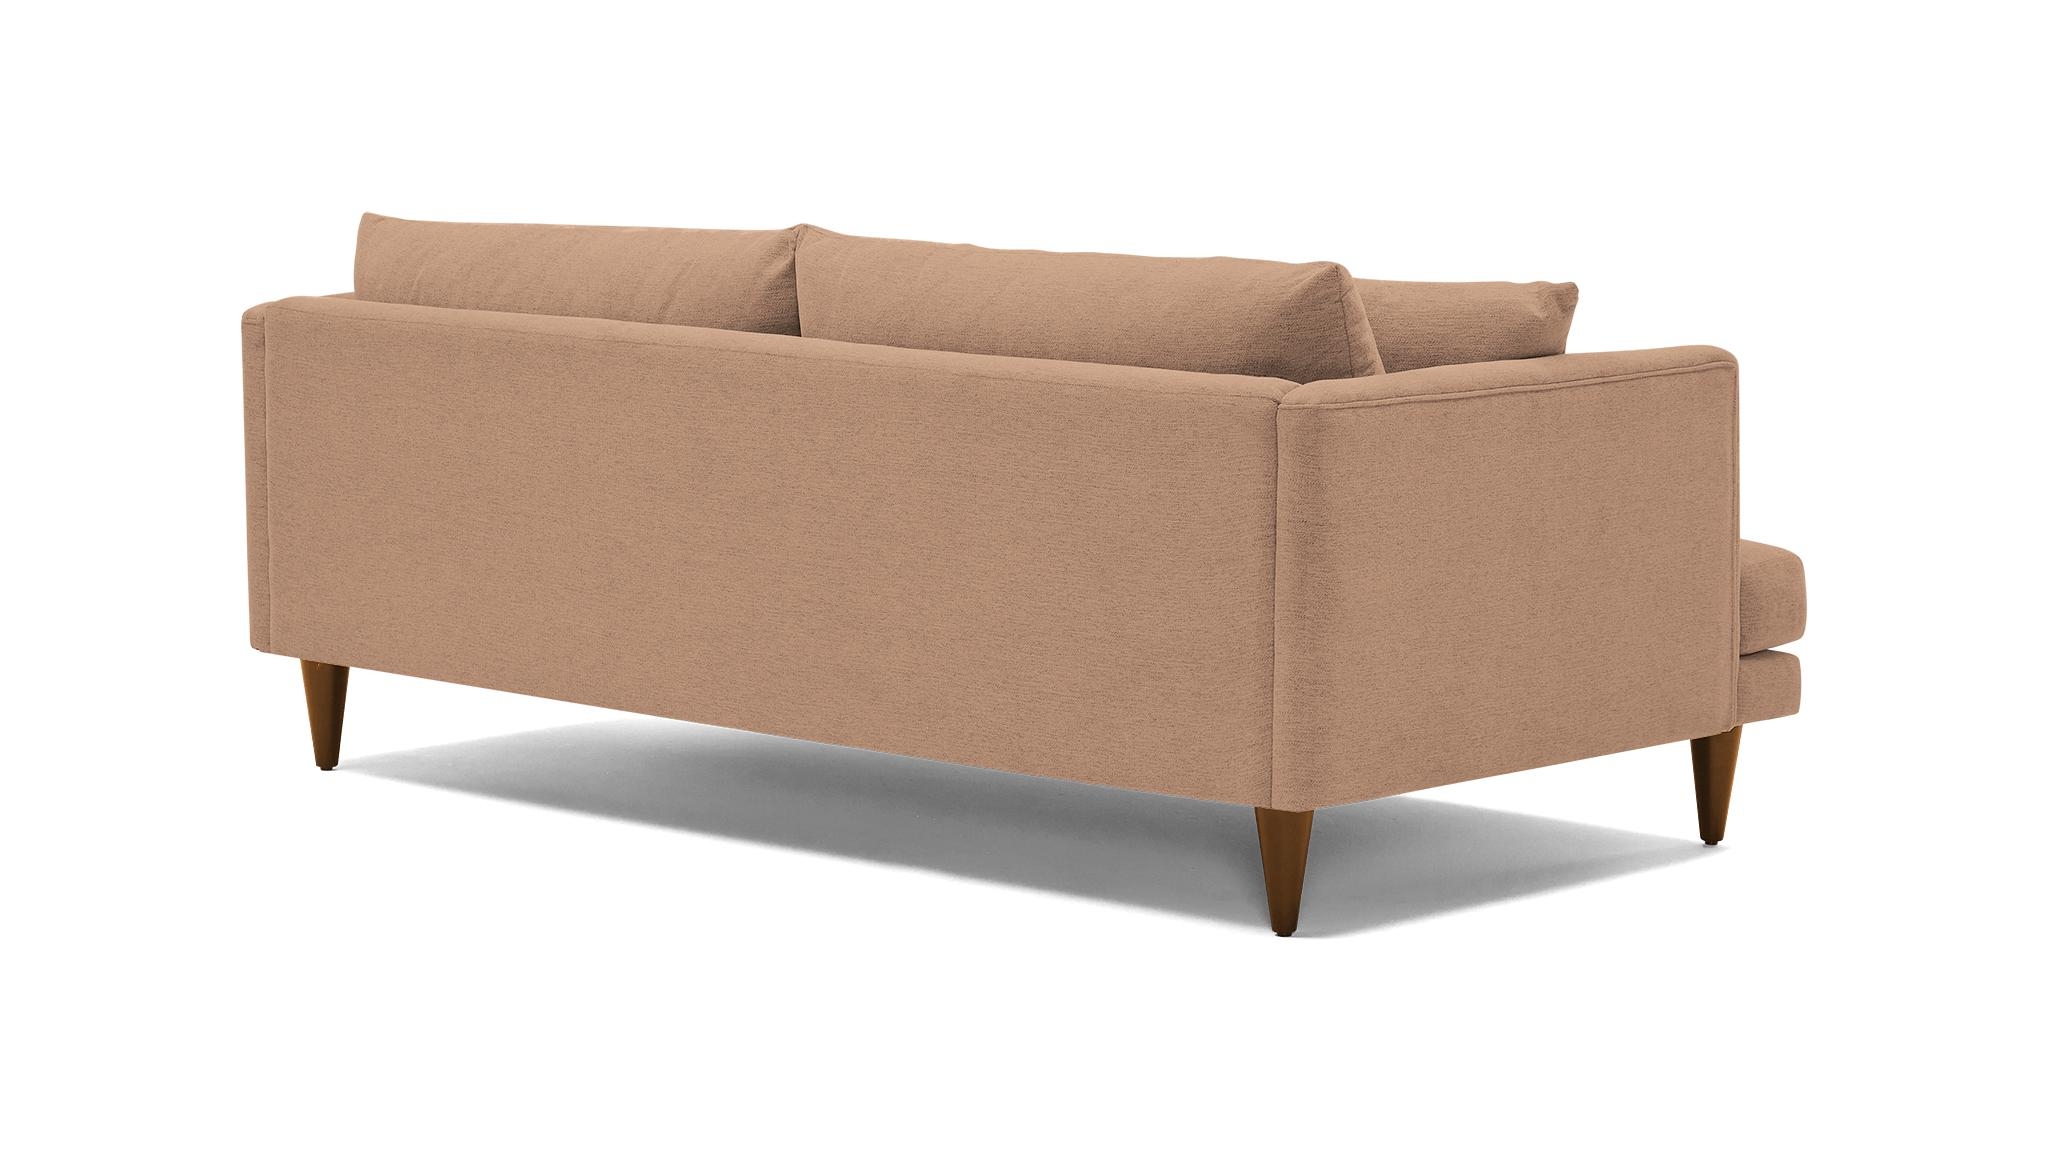 Peach Lewis Mid Century Modern Sofa - Royale Blush - Mocha - Cone - Image 3